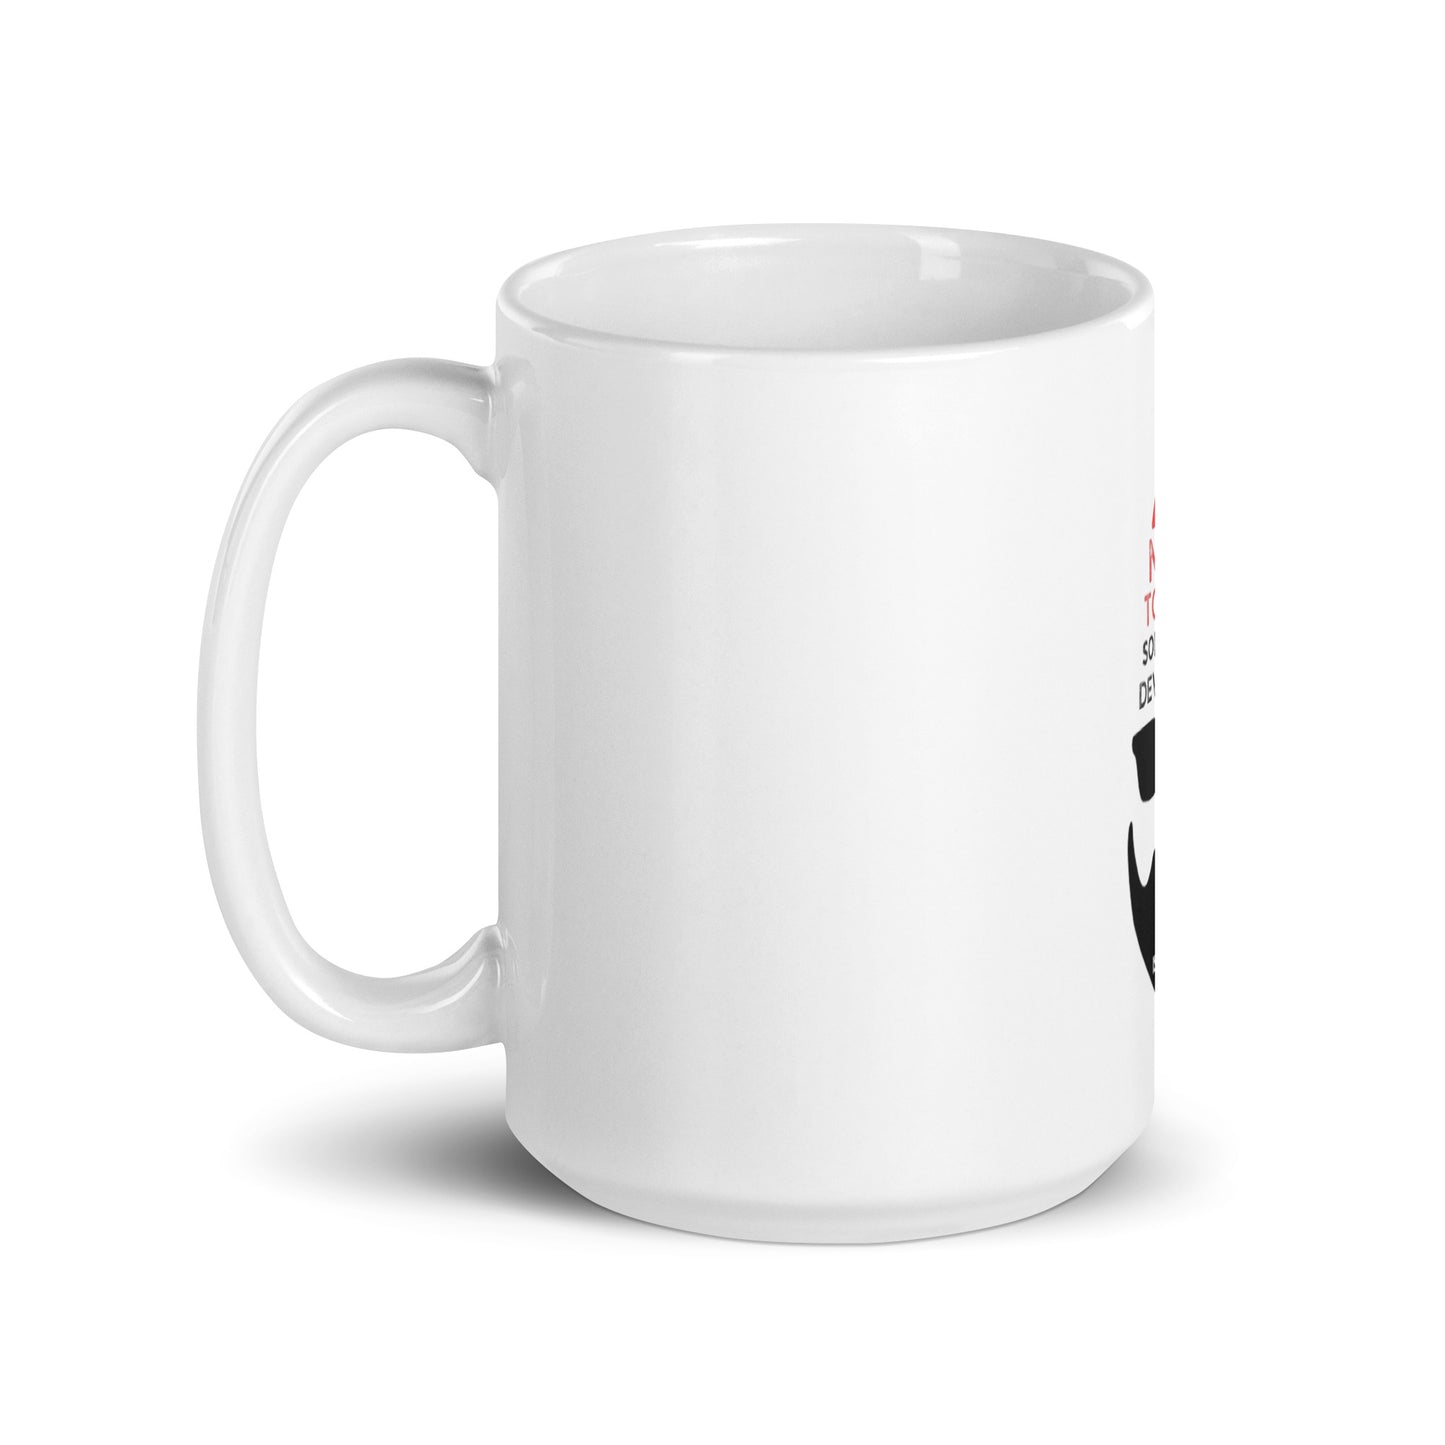 Be Nice To Developer mug